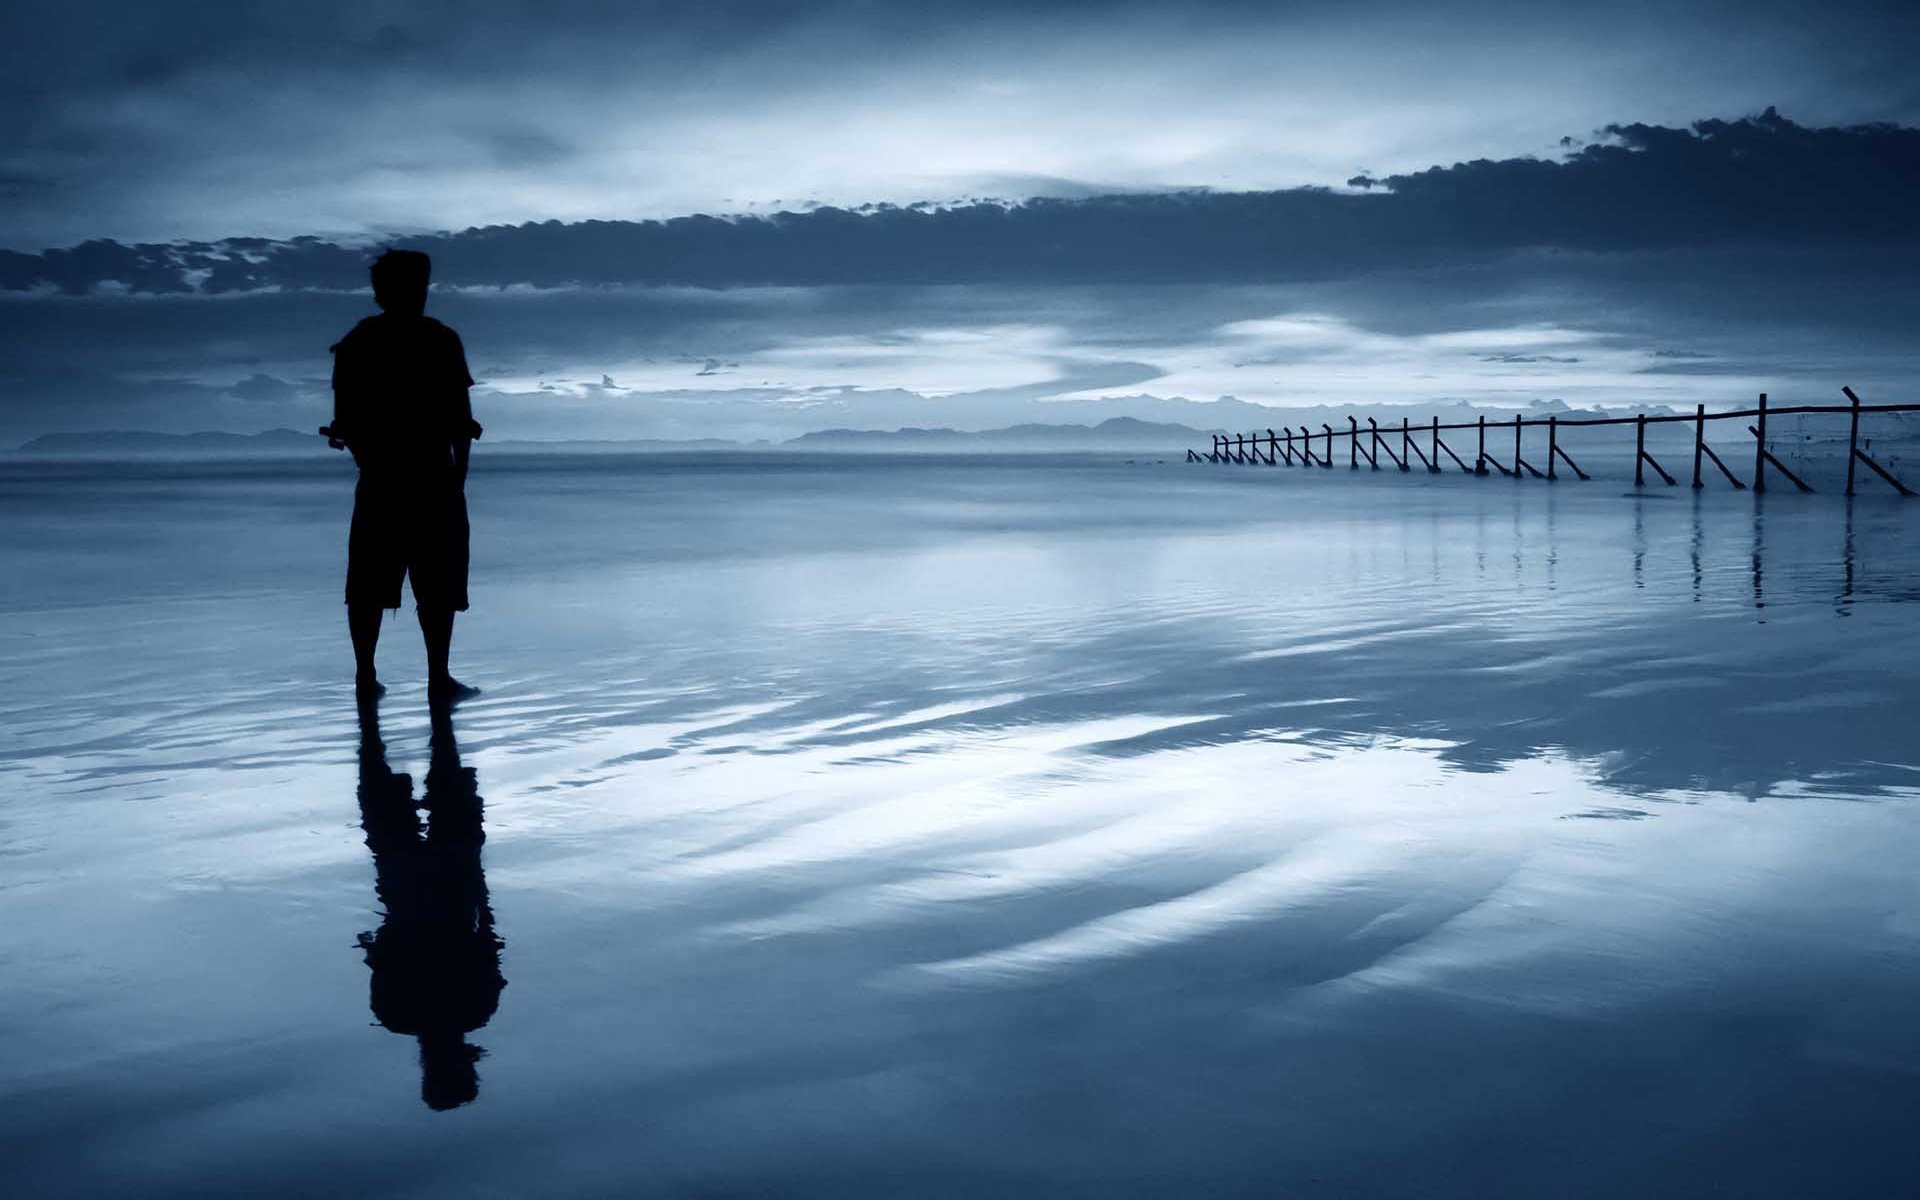 Glimpse of your reflection. Идет по воде. Человек идет по воде. Размышления о жизни. Раздумья о жизни.